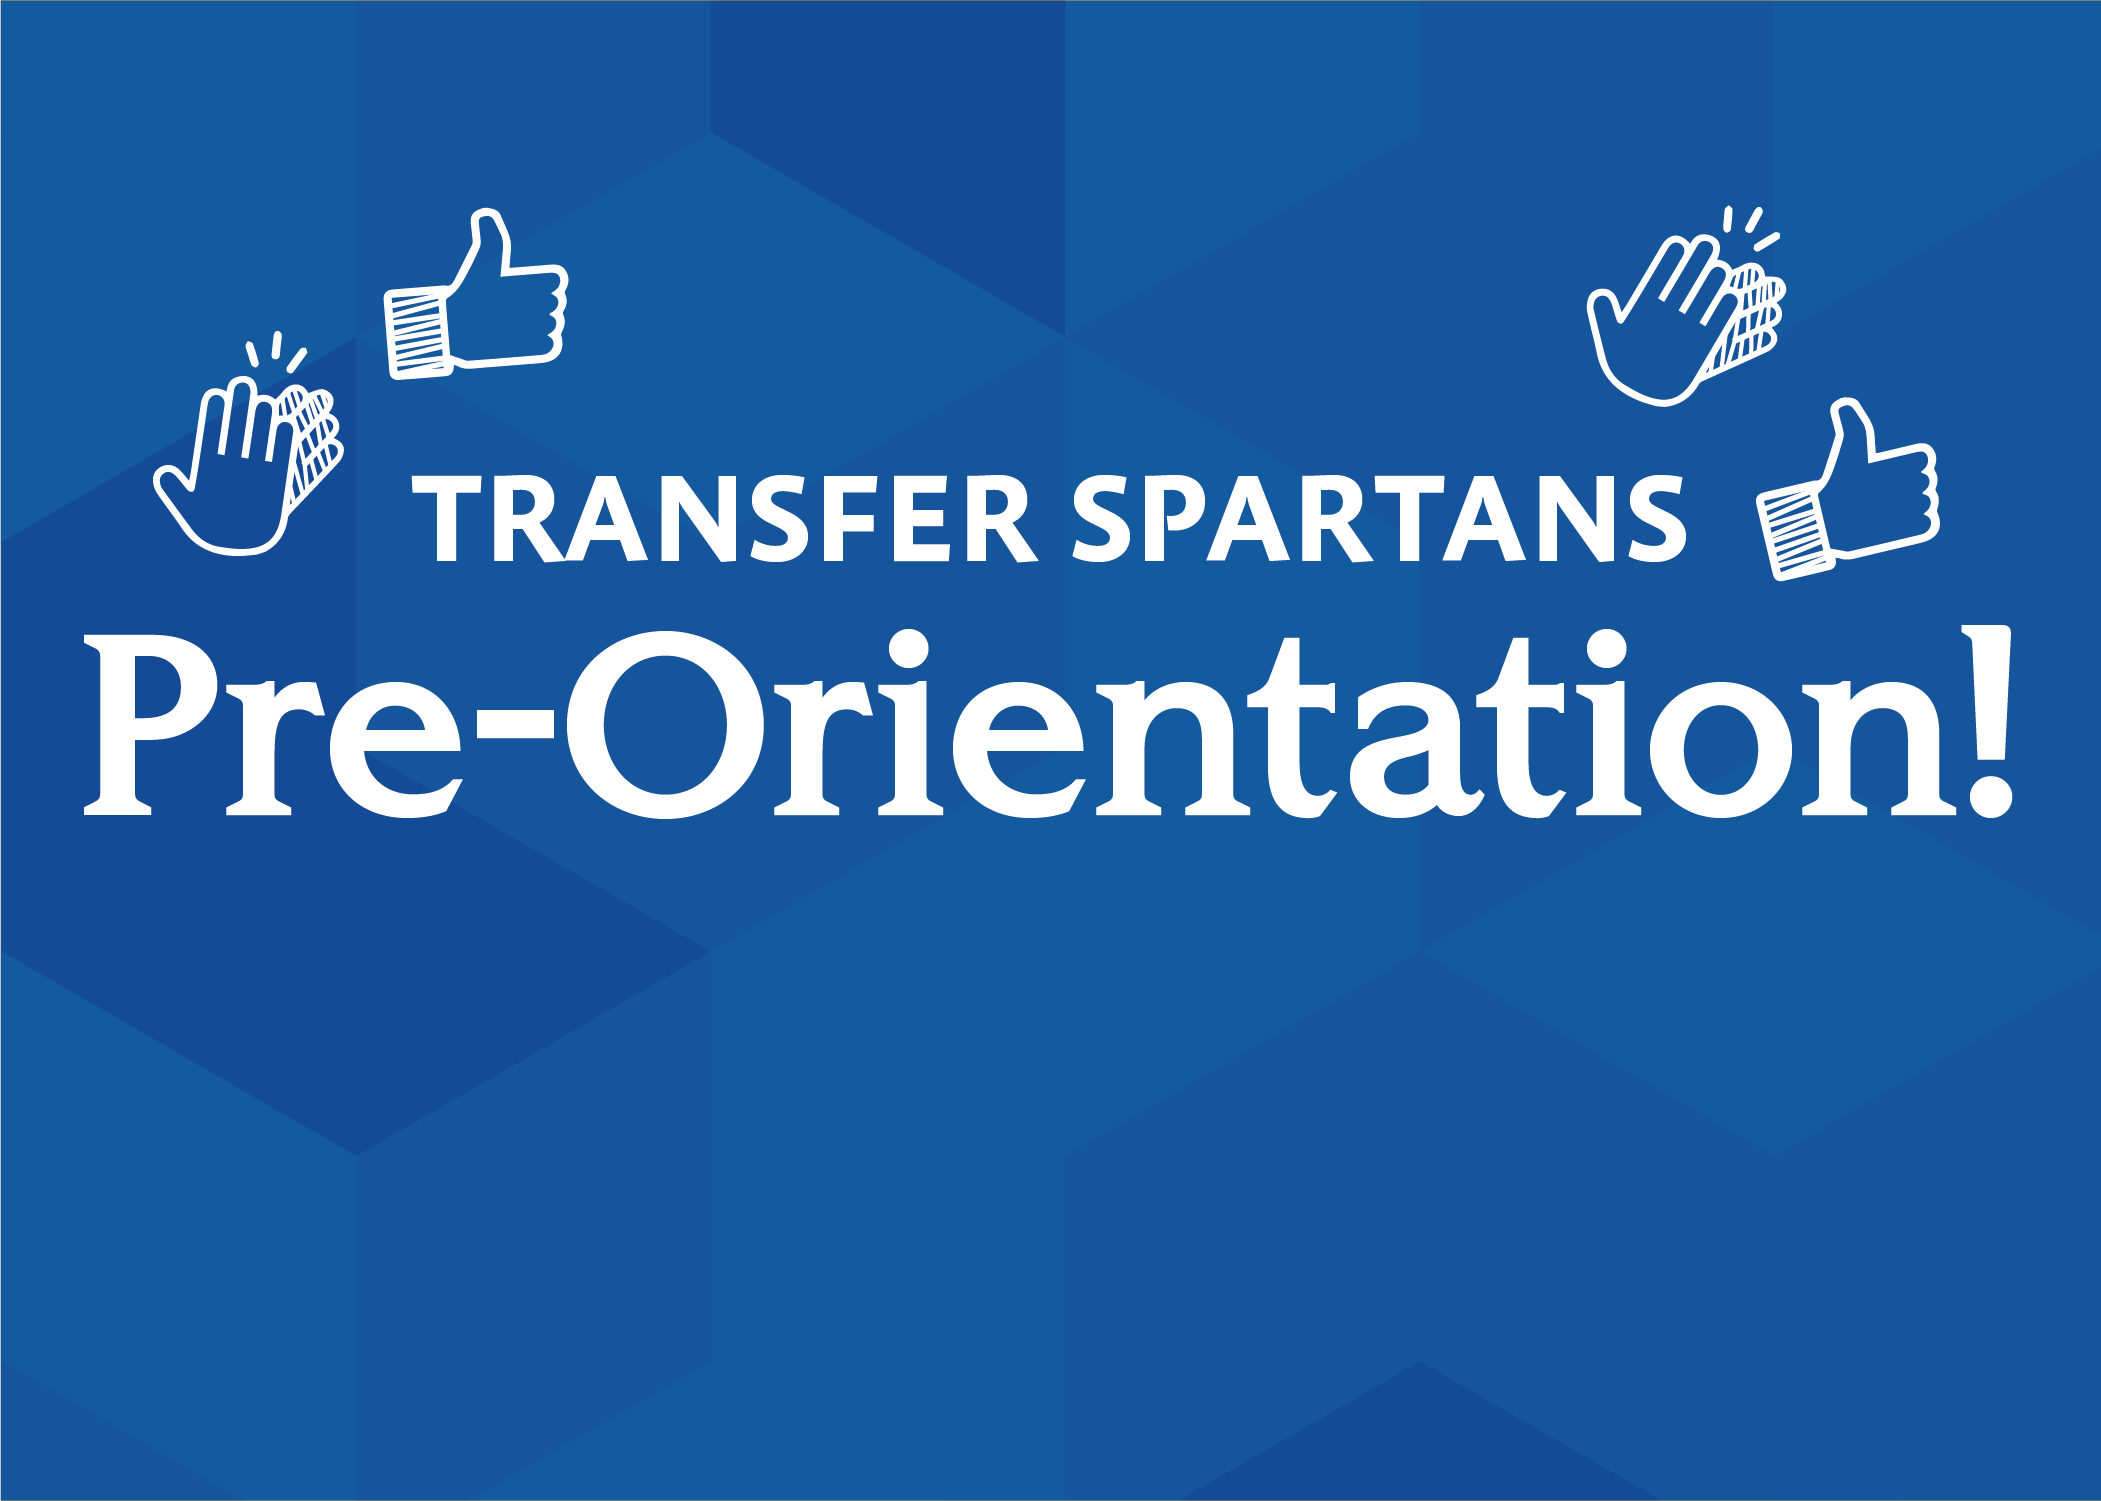 Transfer Spartans Pre-Orientation